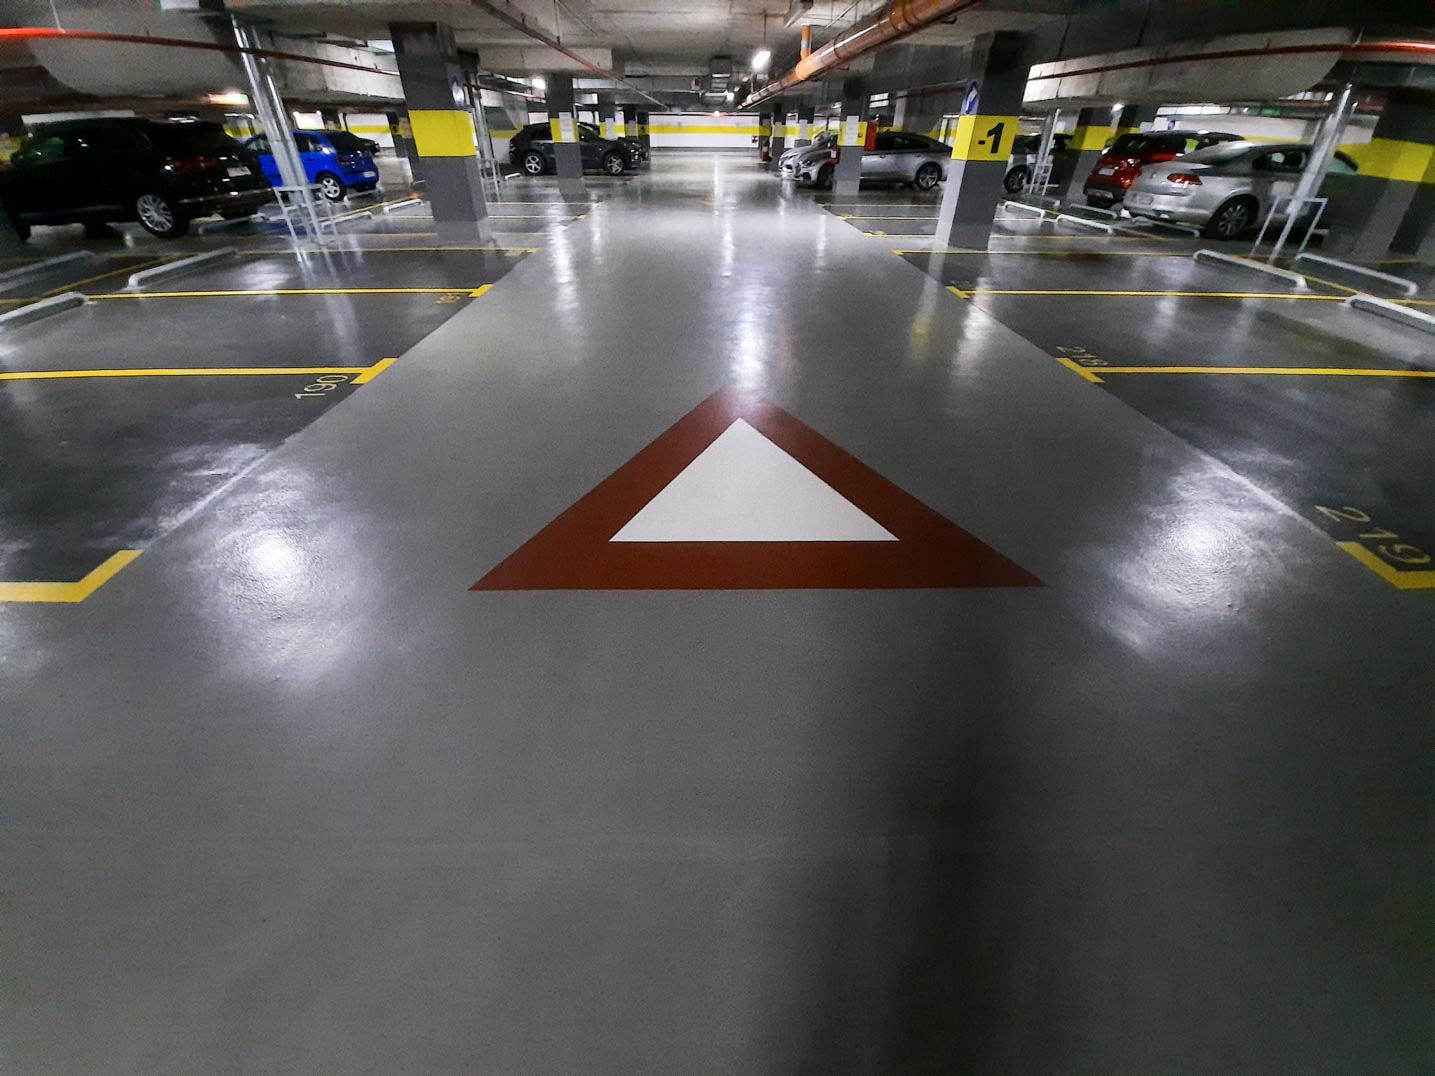 seamless floor for parkings